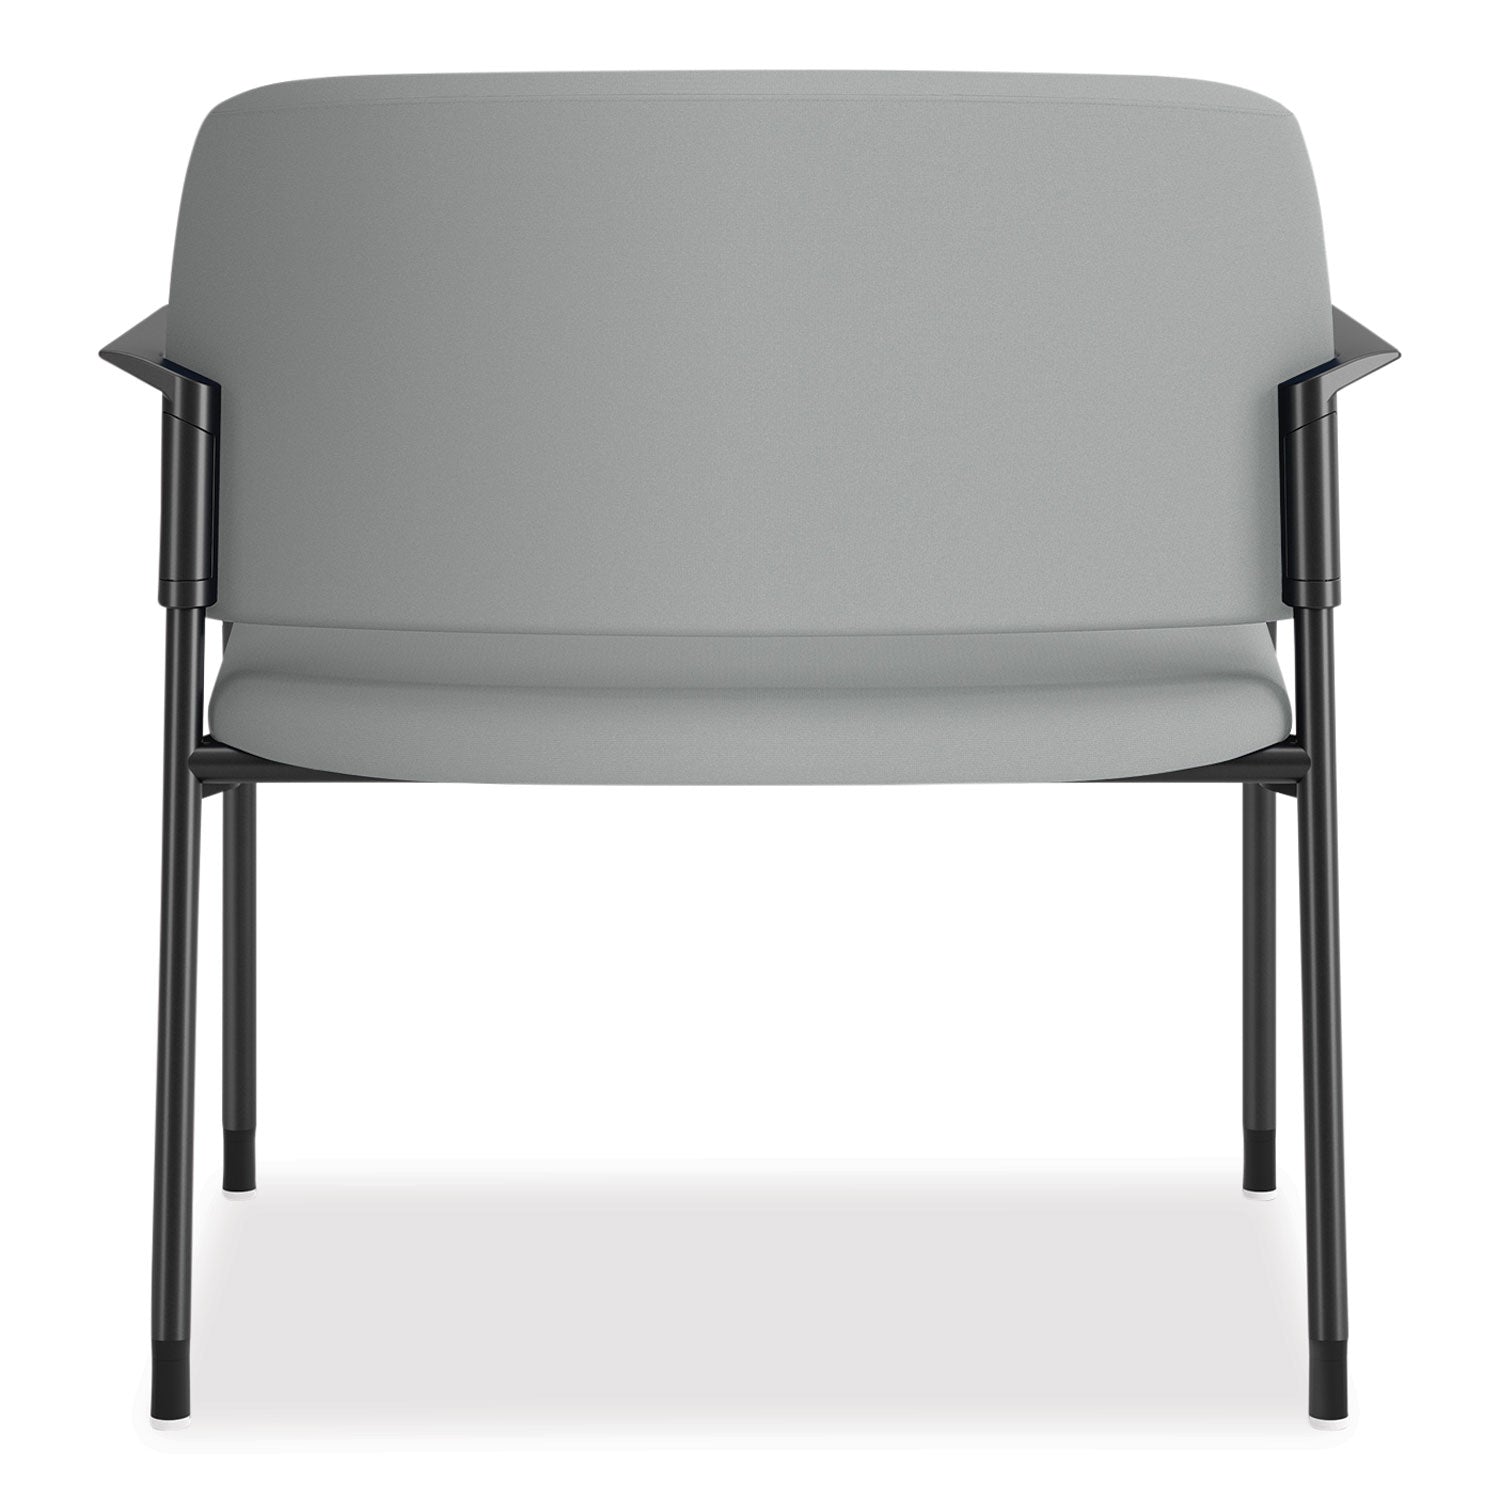 accommodate-series-bariatric-chair-with-arms-335-x-215-x-325-flint-seat-flint-back-charblack-legs_honsb50fesx39cb - 4